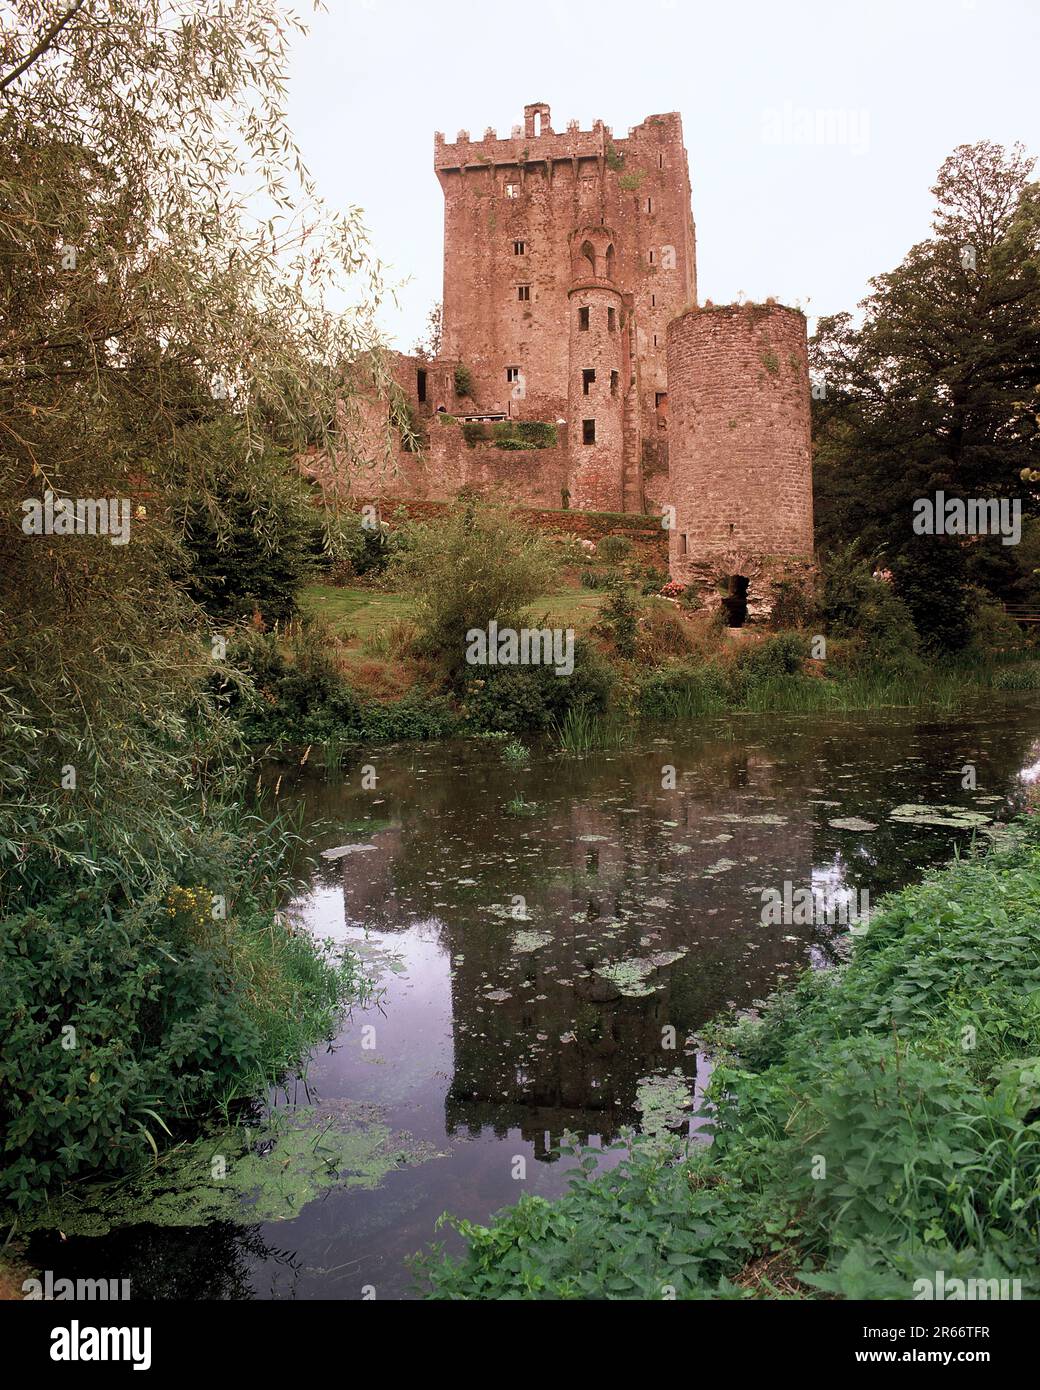 Ireland. County Cork. Blarney Castle & moat. Stock Photo